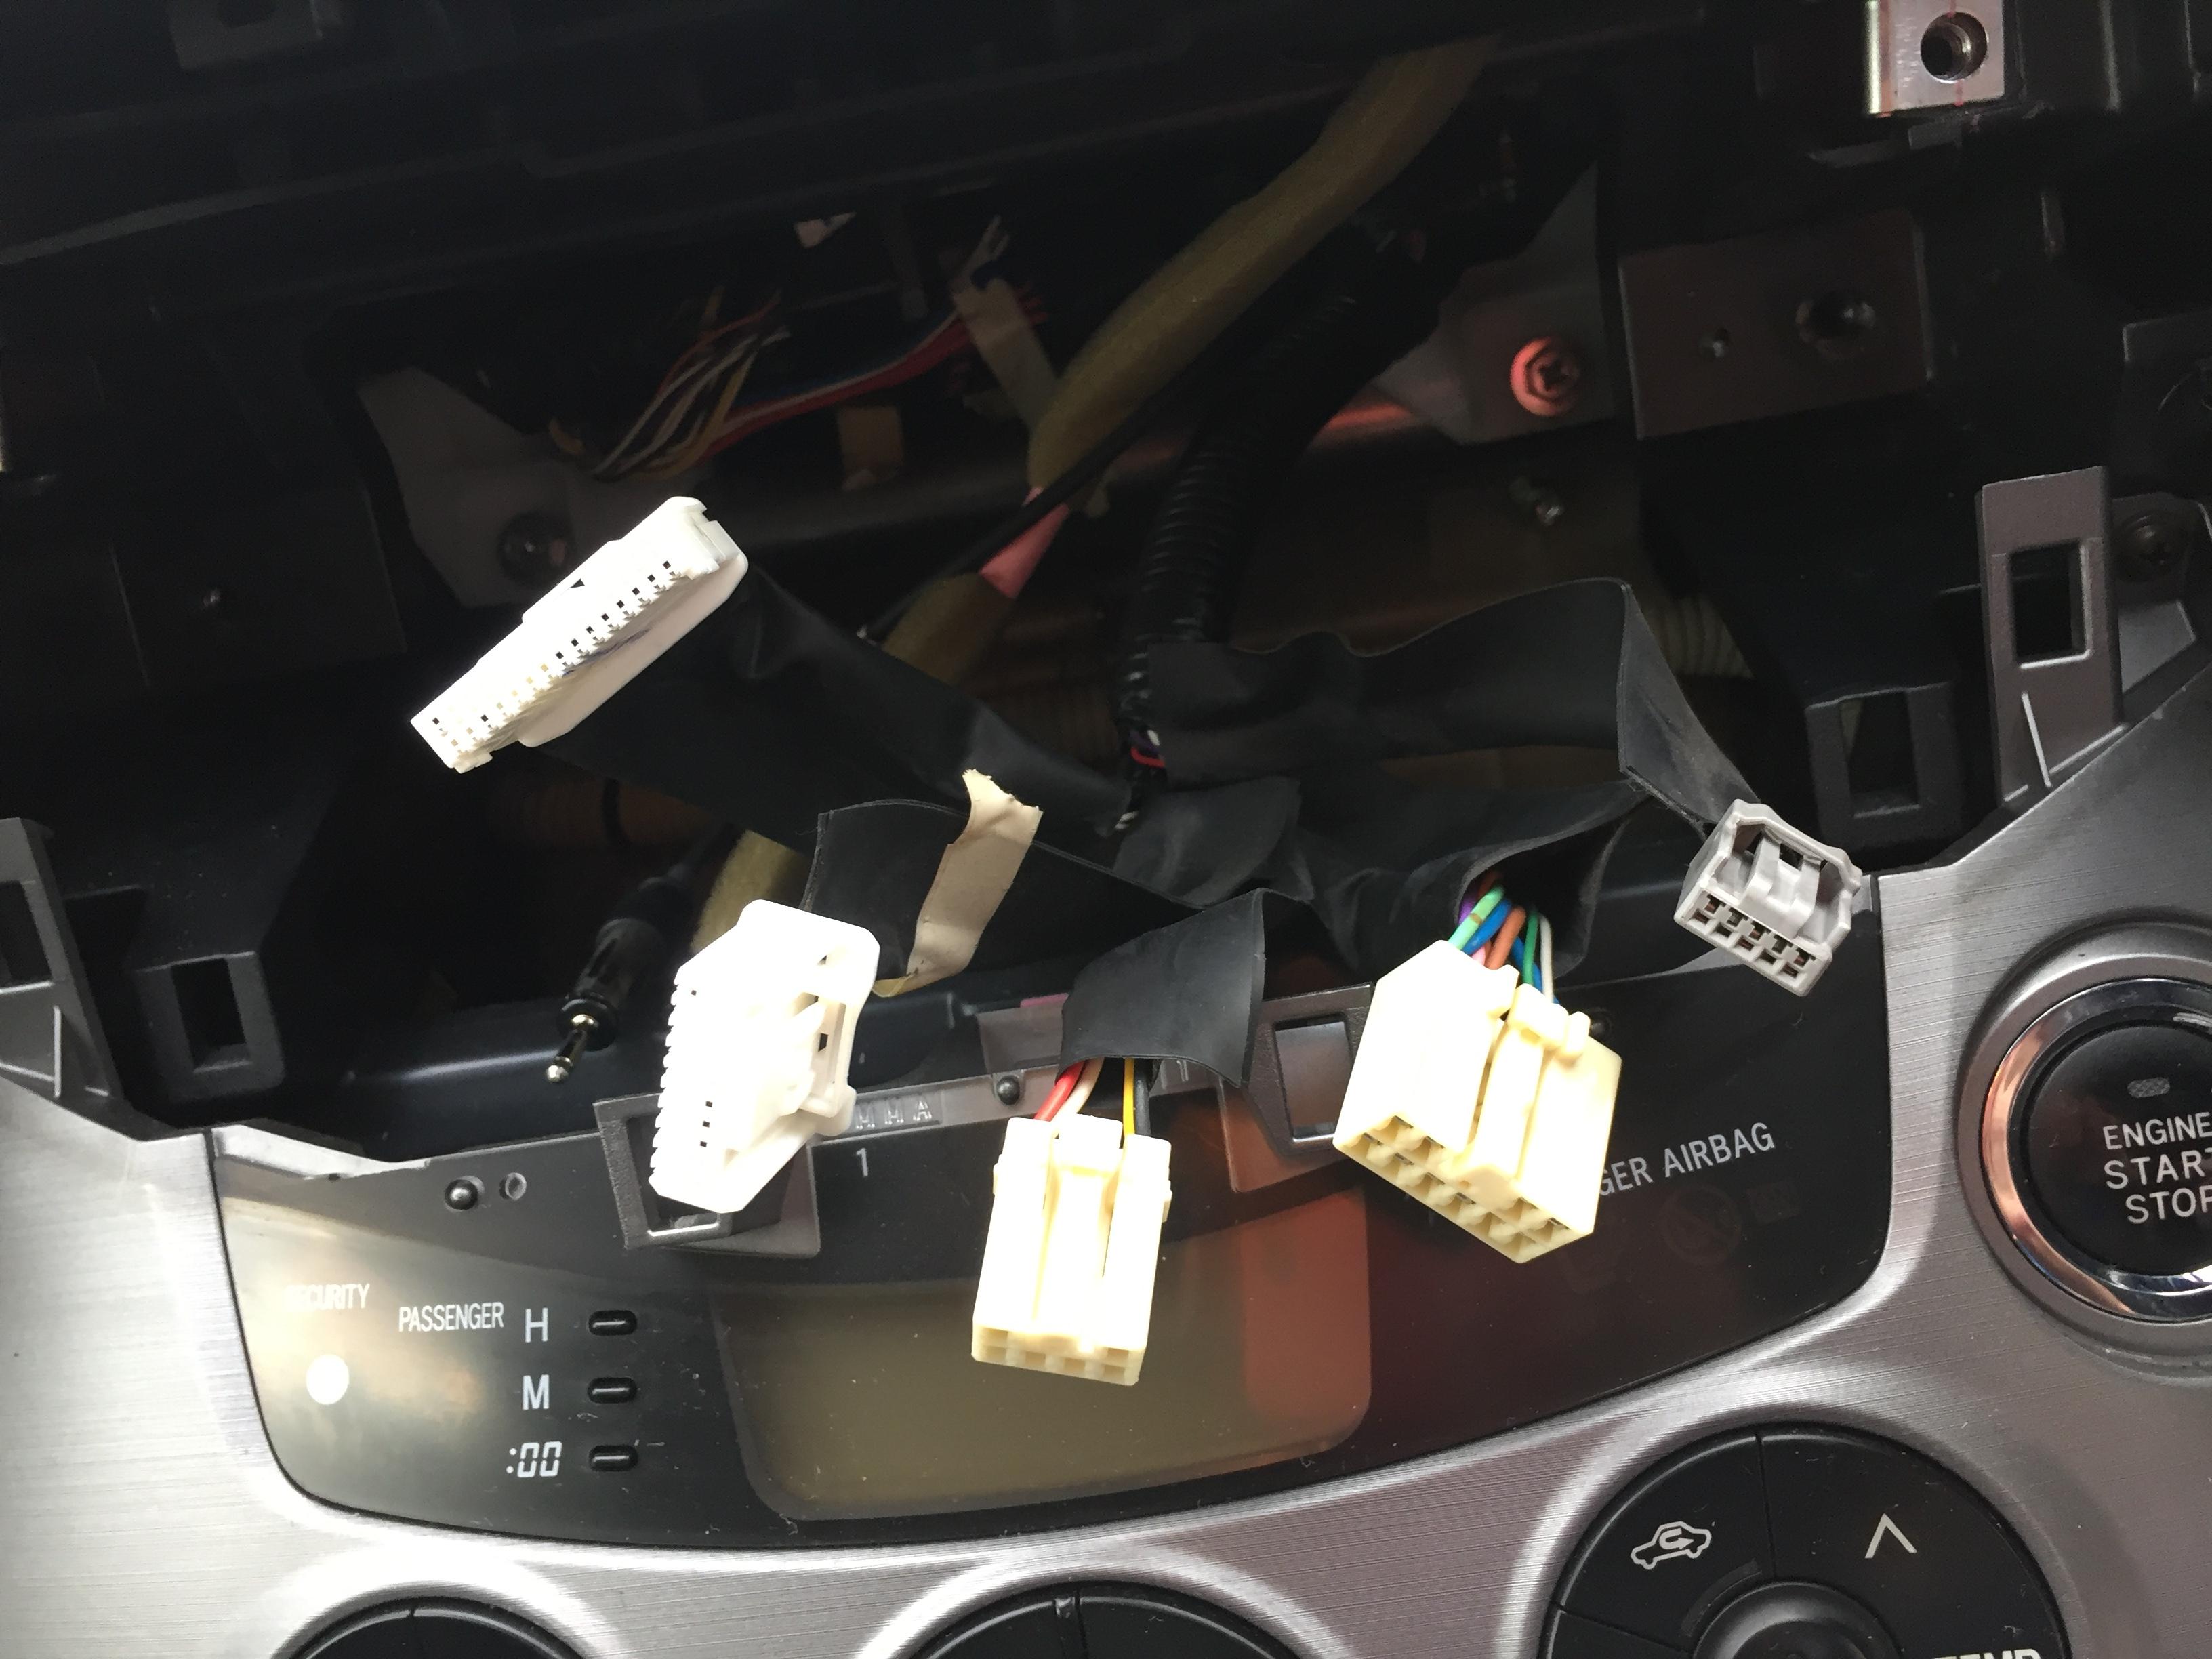 Audio system cable - Steering wheel controls + Mic - Rav 4 Club